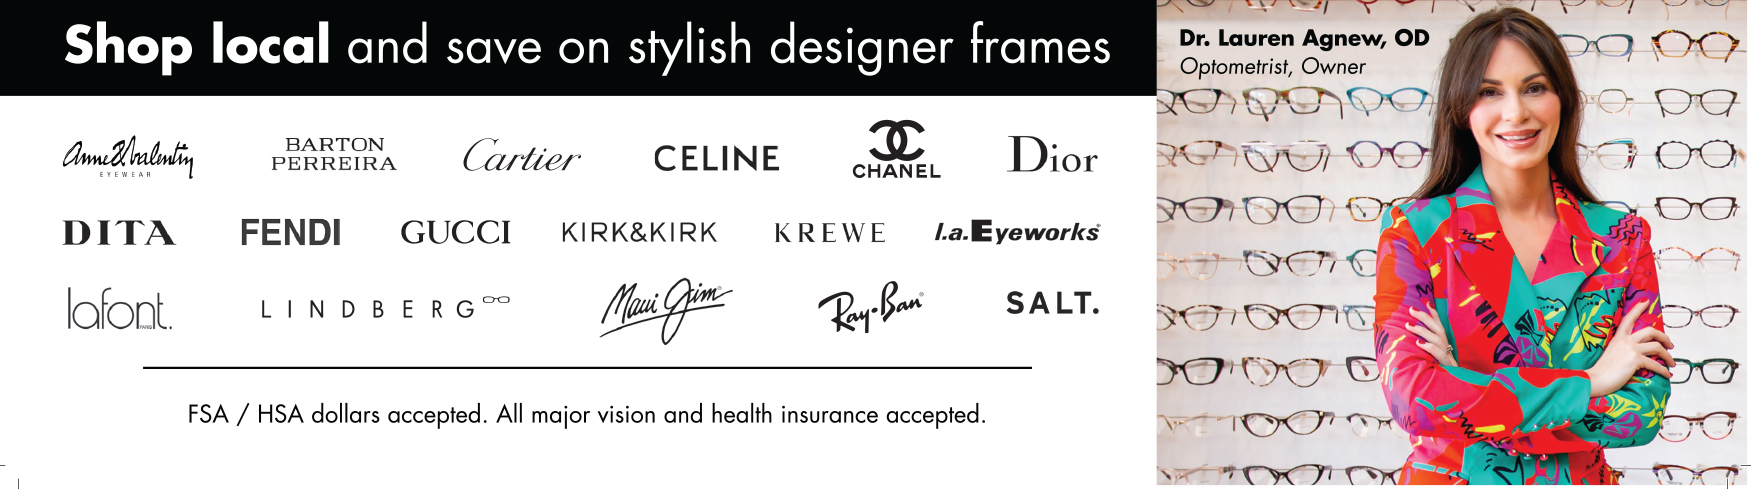 Cartier, Celine, Chanel, Dior, Fendi, Gucci, Krewe, LA Eyeworks, Salt, fashion eye glasses